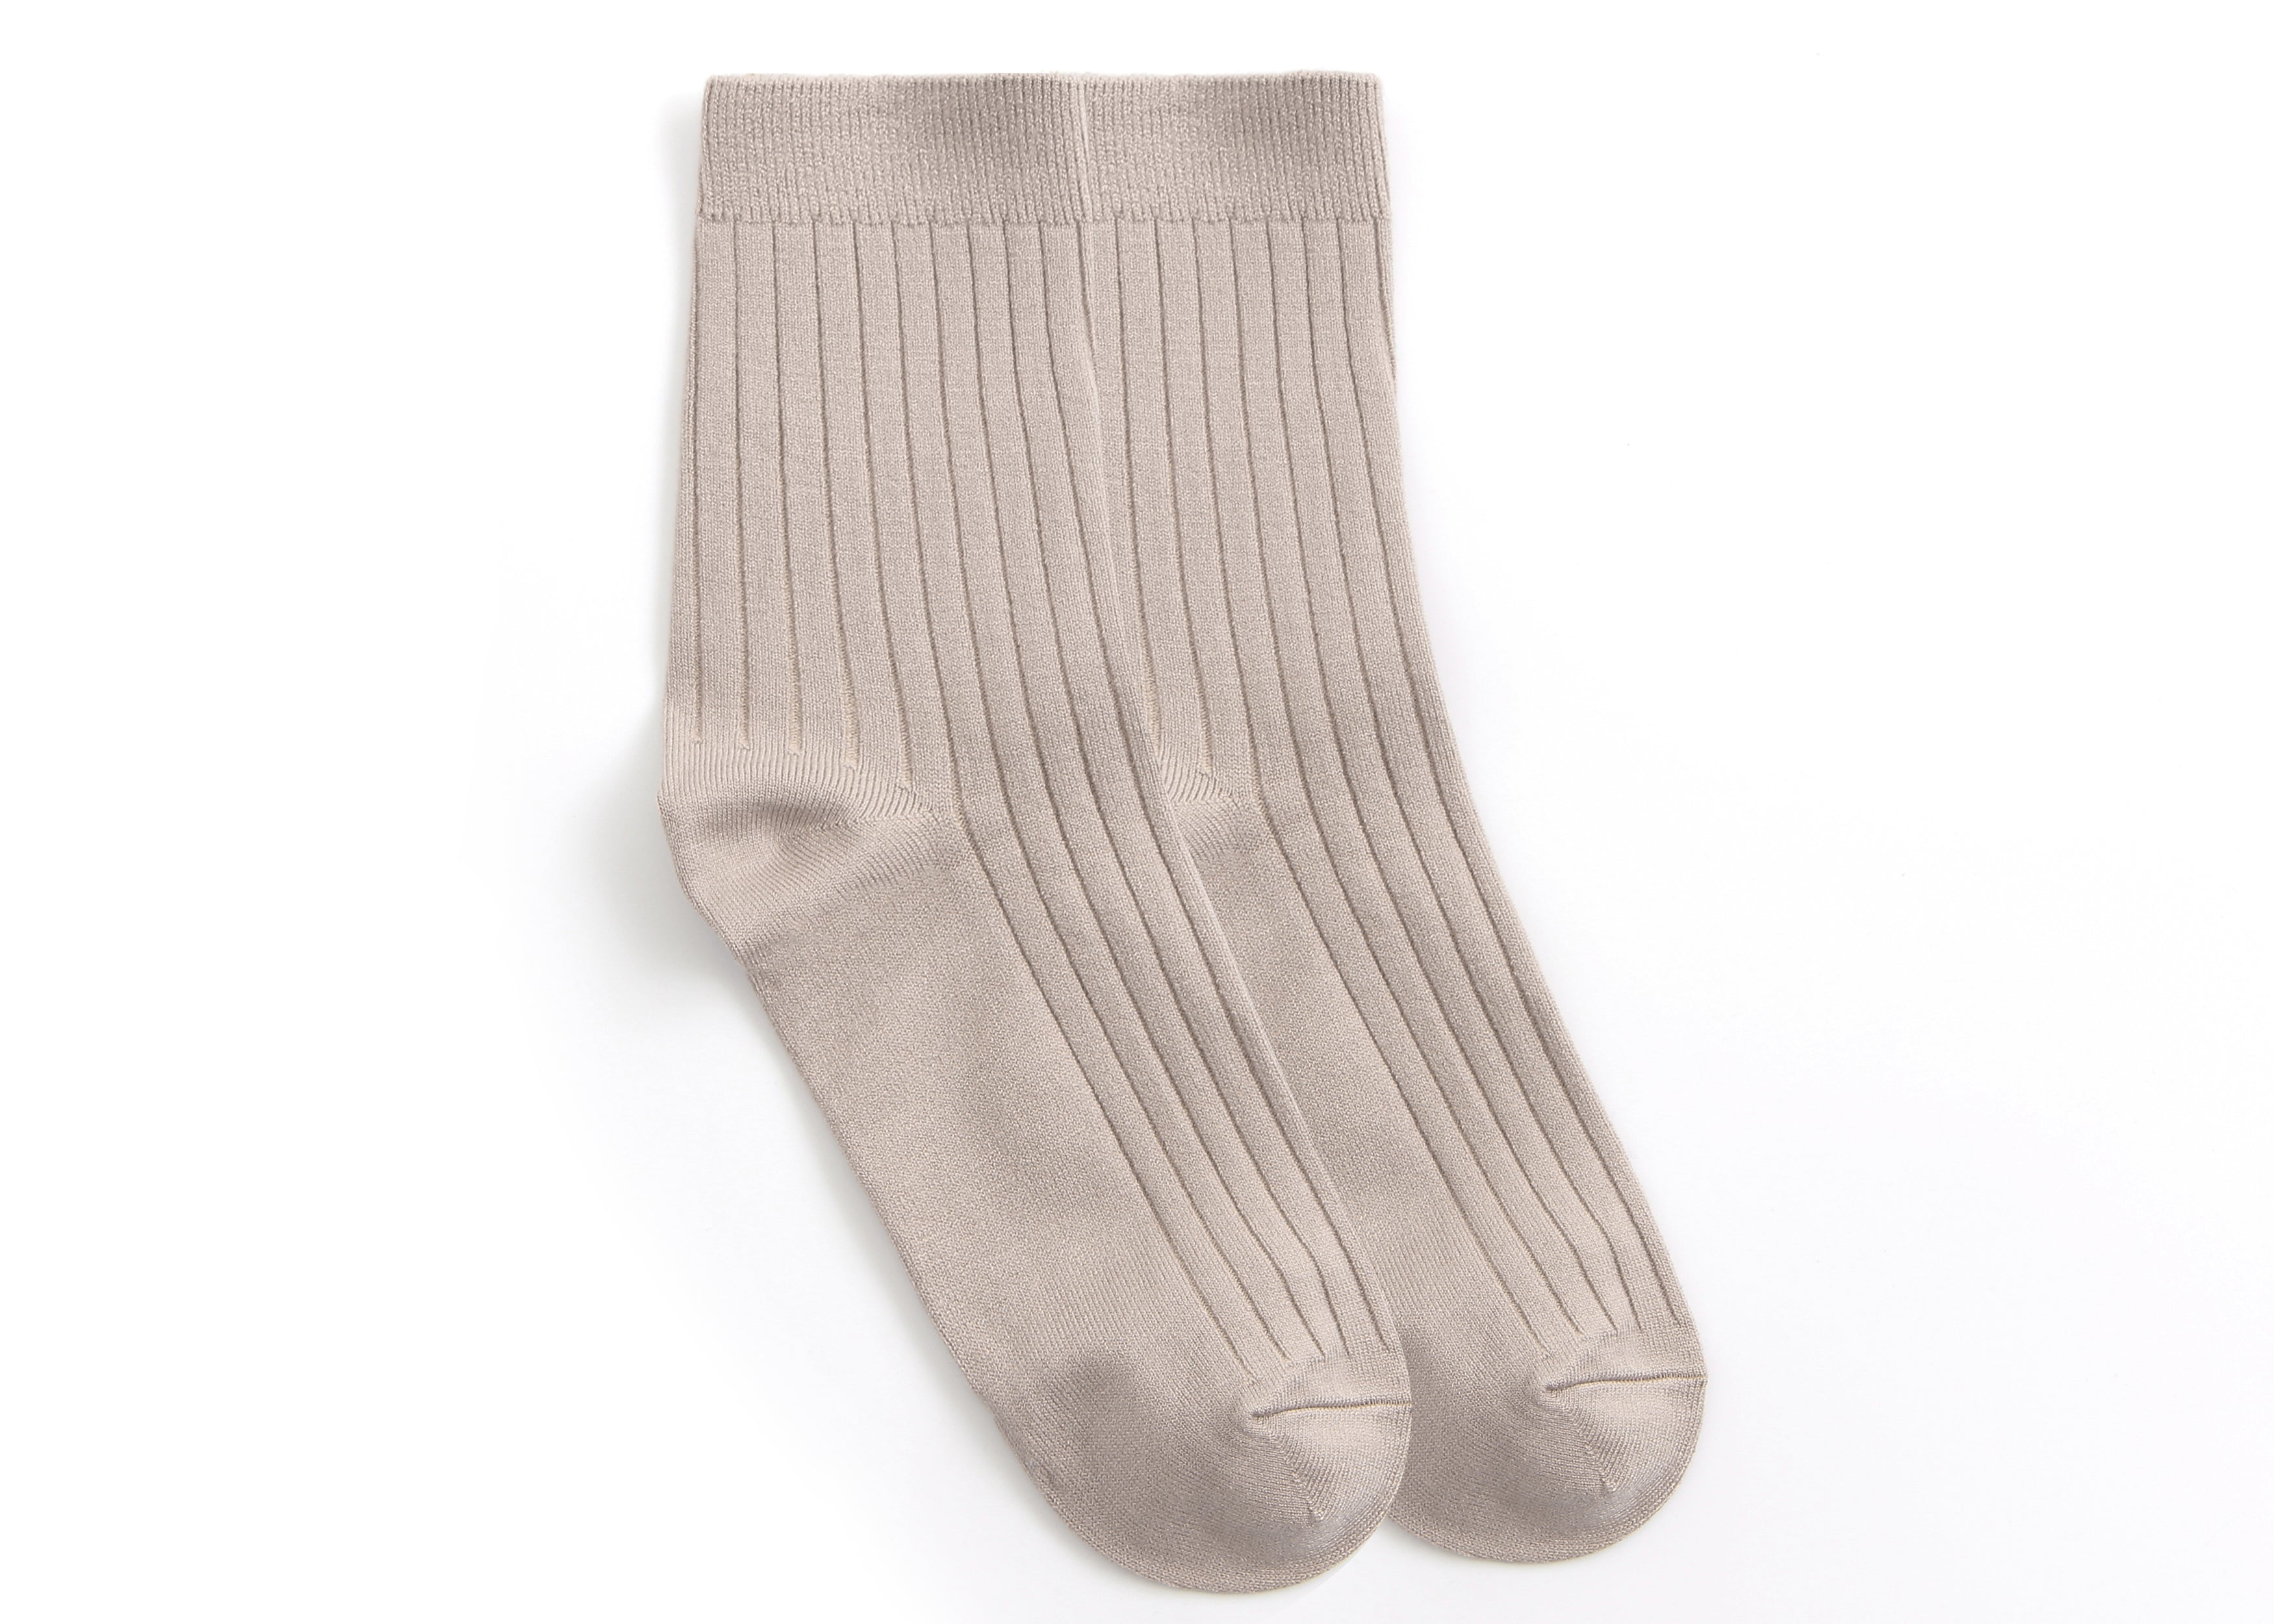 TARRAMARRA® Men Wool Blend Socks 4 Pairs